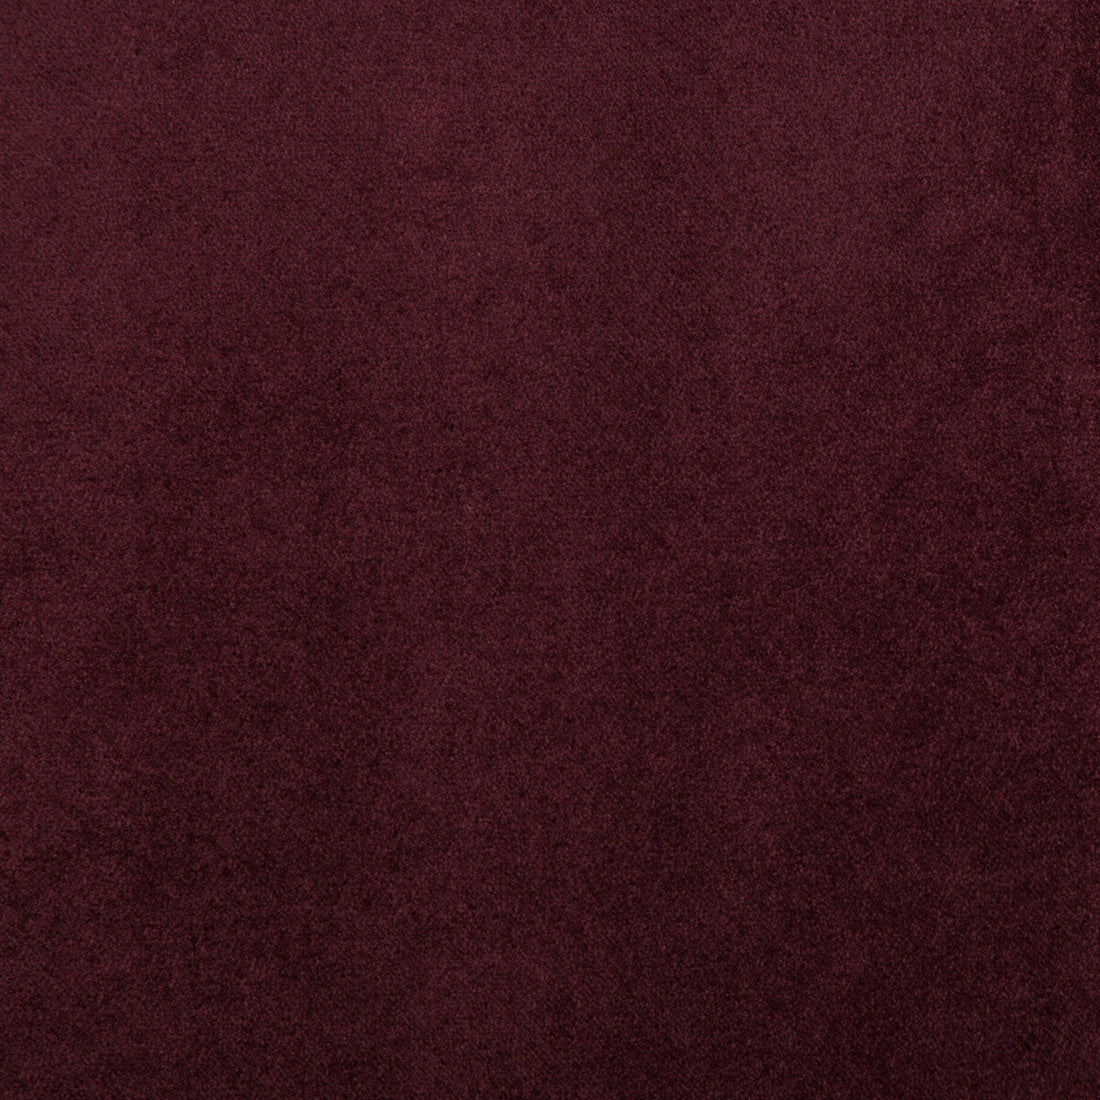 Madison Velvet fabric in raisin color - pattern 35402.99.0 - by Kravet Contract